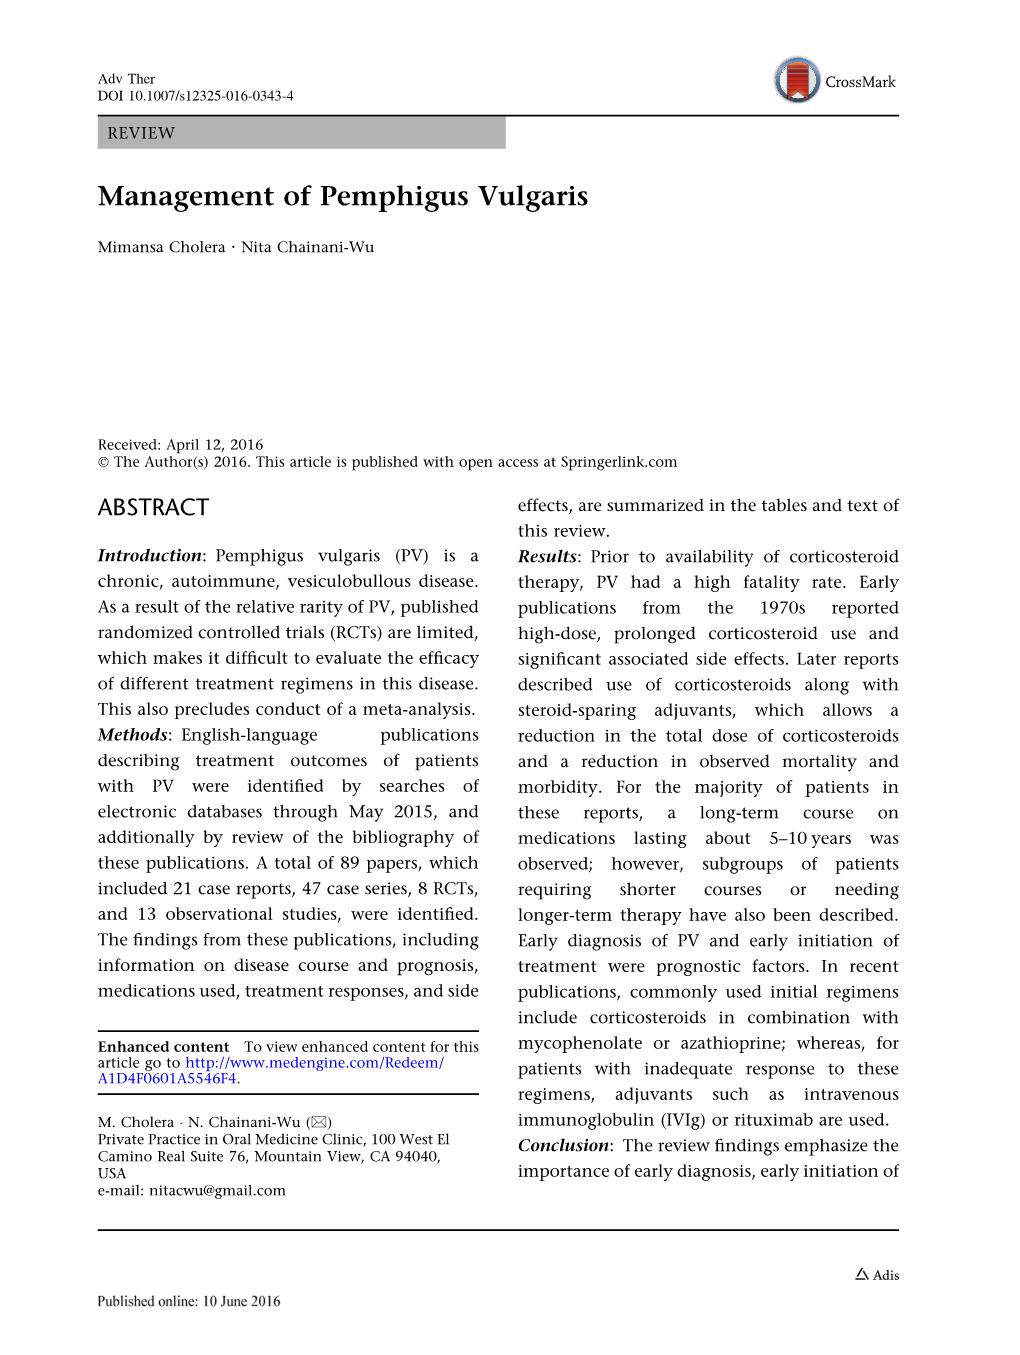 Management of Pemphigus Vulgaris